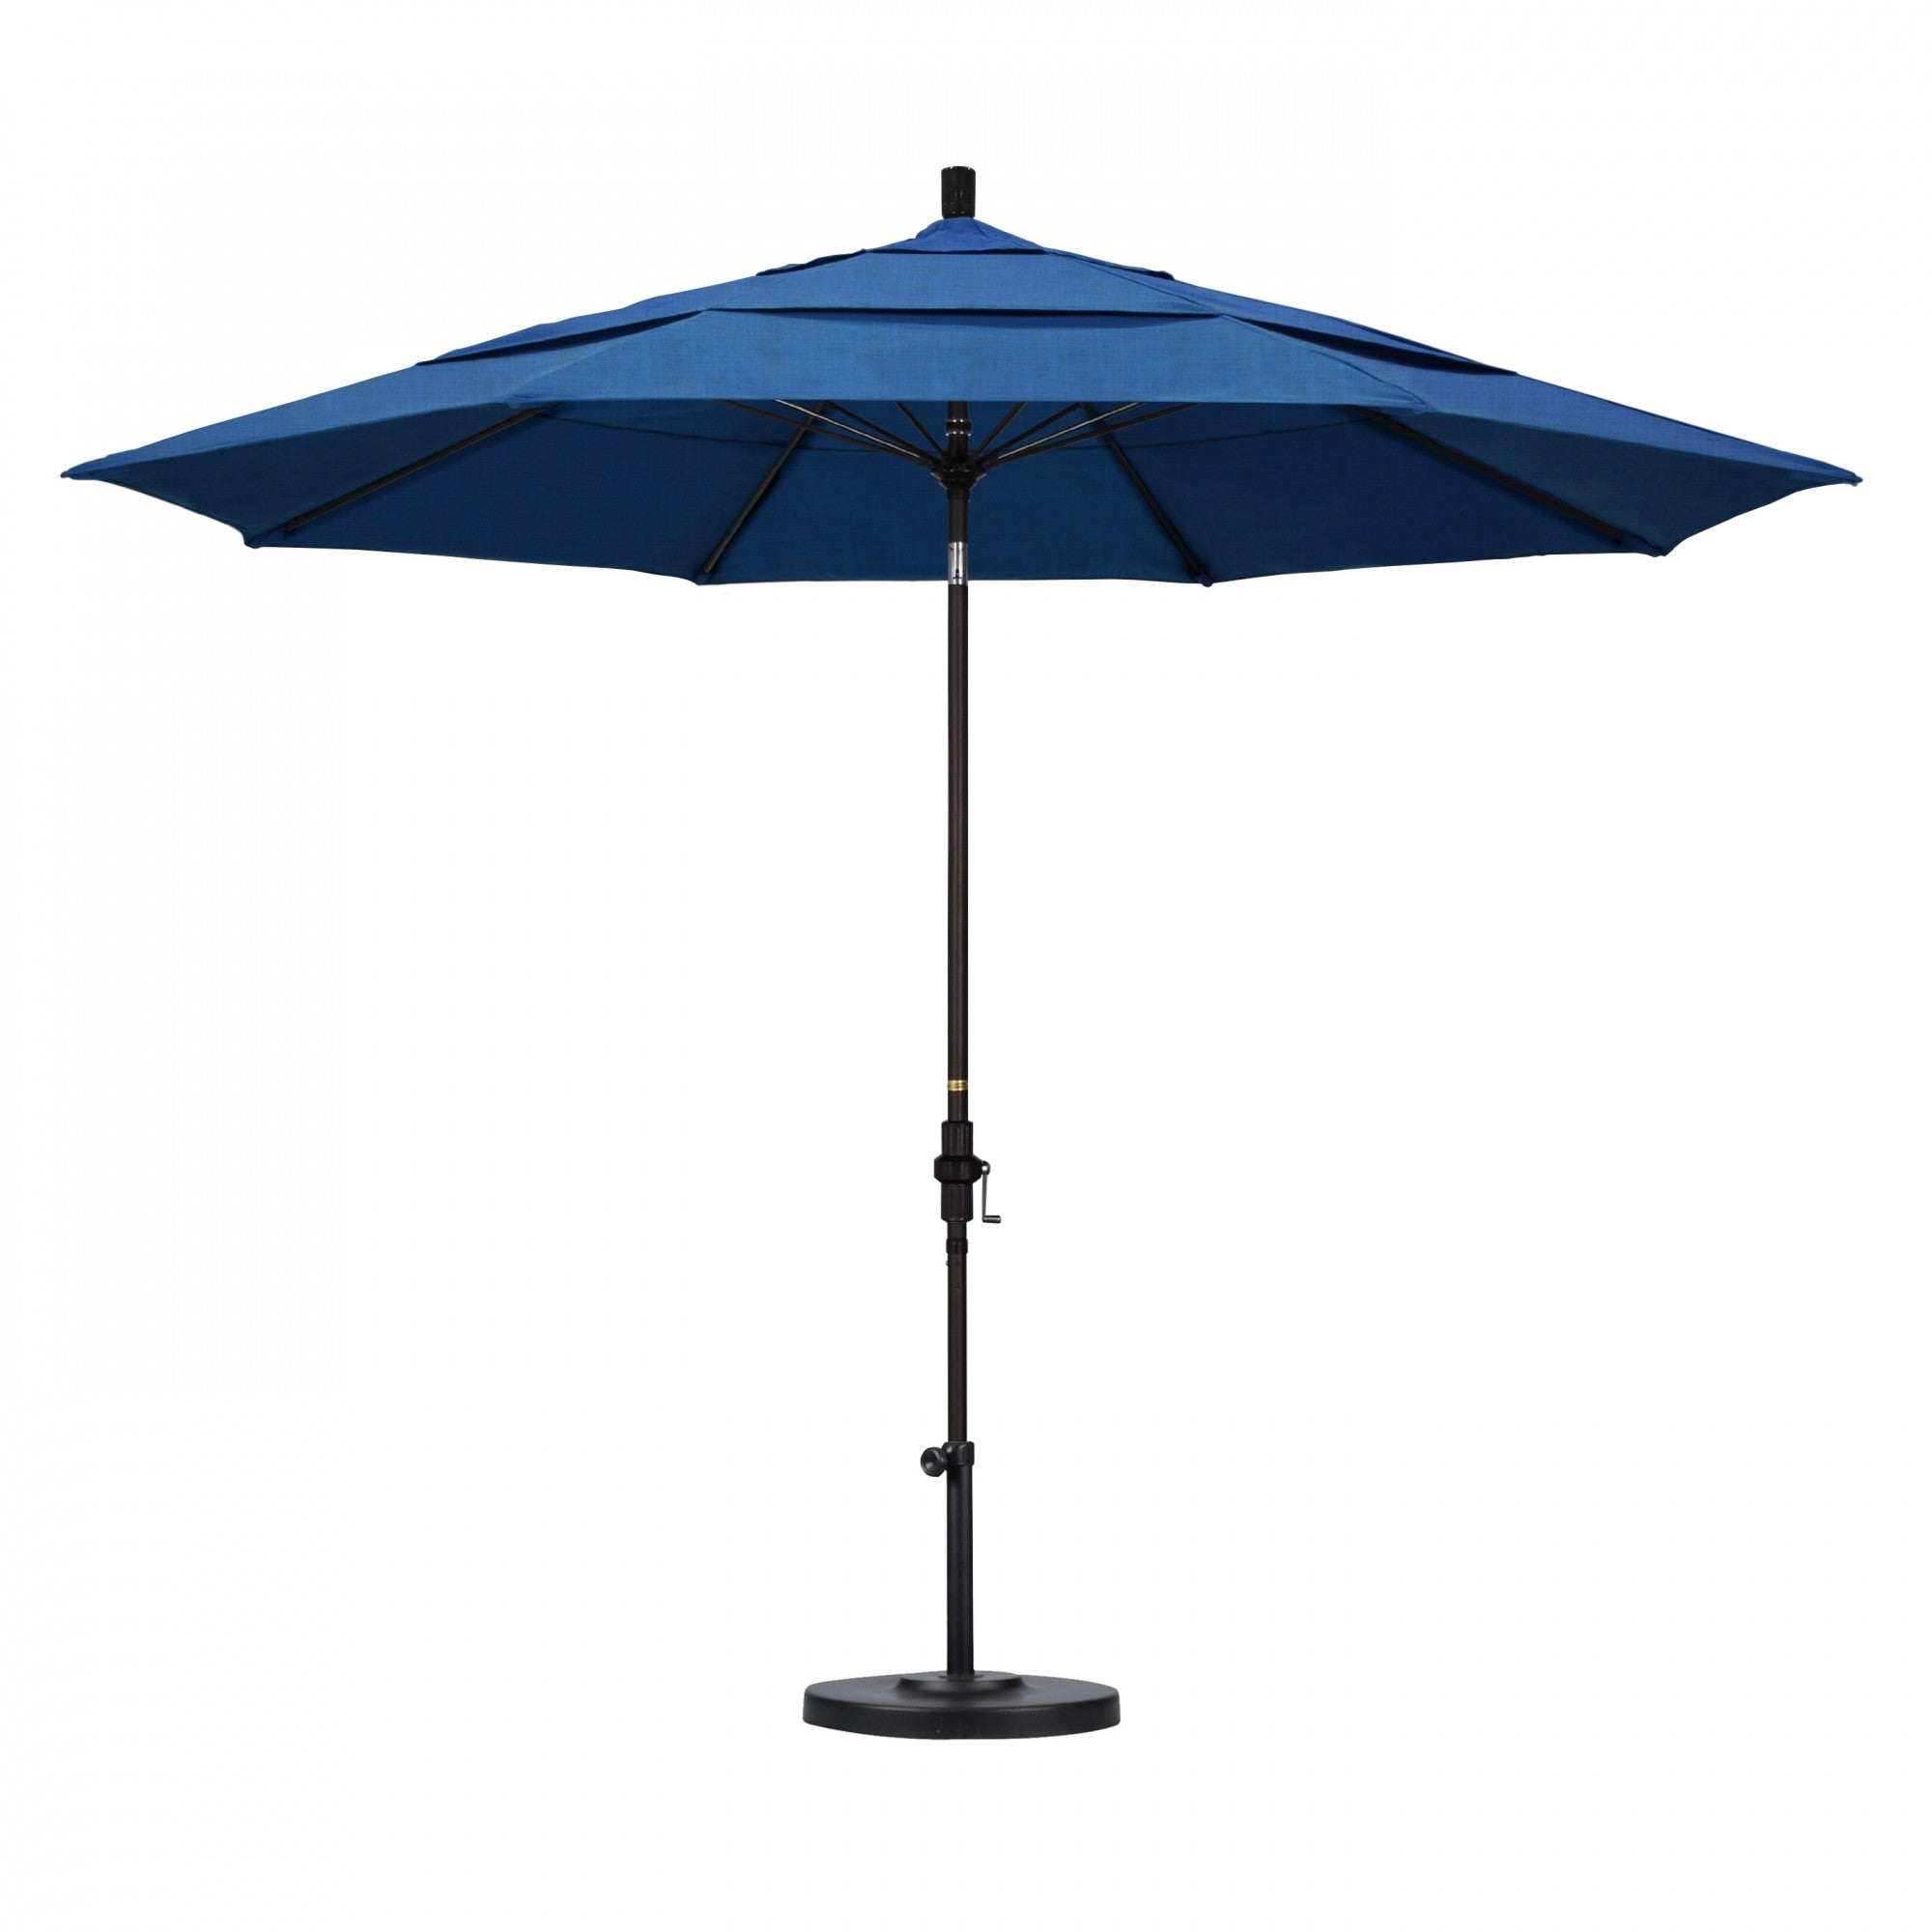 California Umbrella - 11' - Patio Umbrella Umbrella - Aluminum Pole - Regatta - Sunbrella  - GSCUF118117-5493-DWV